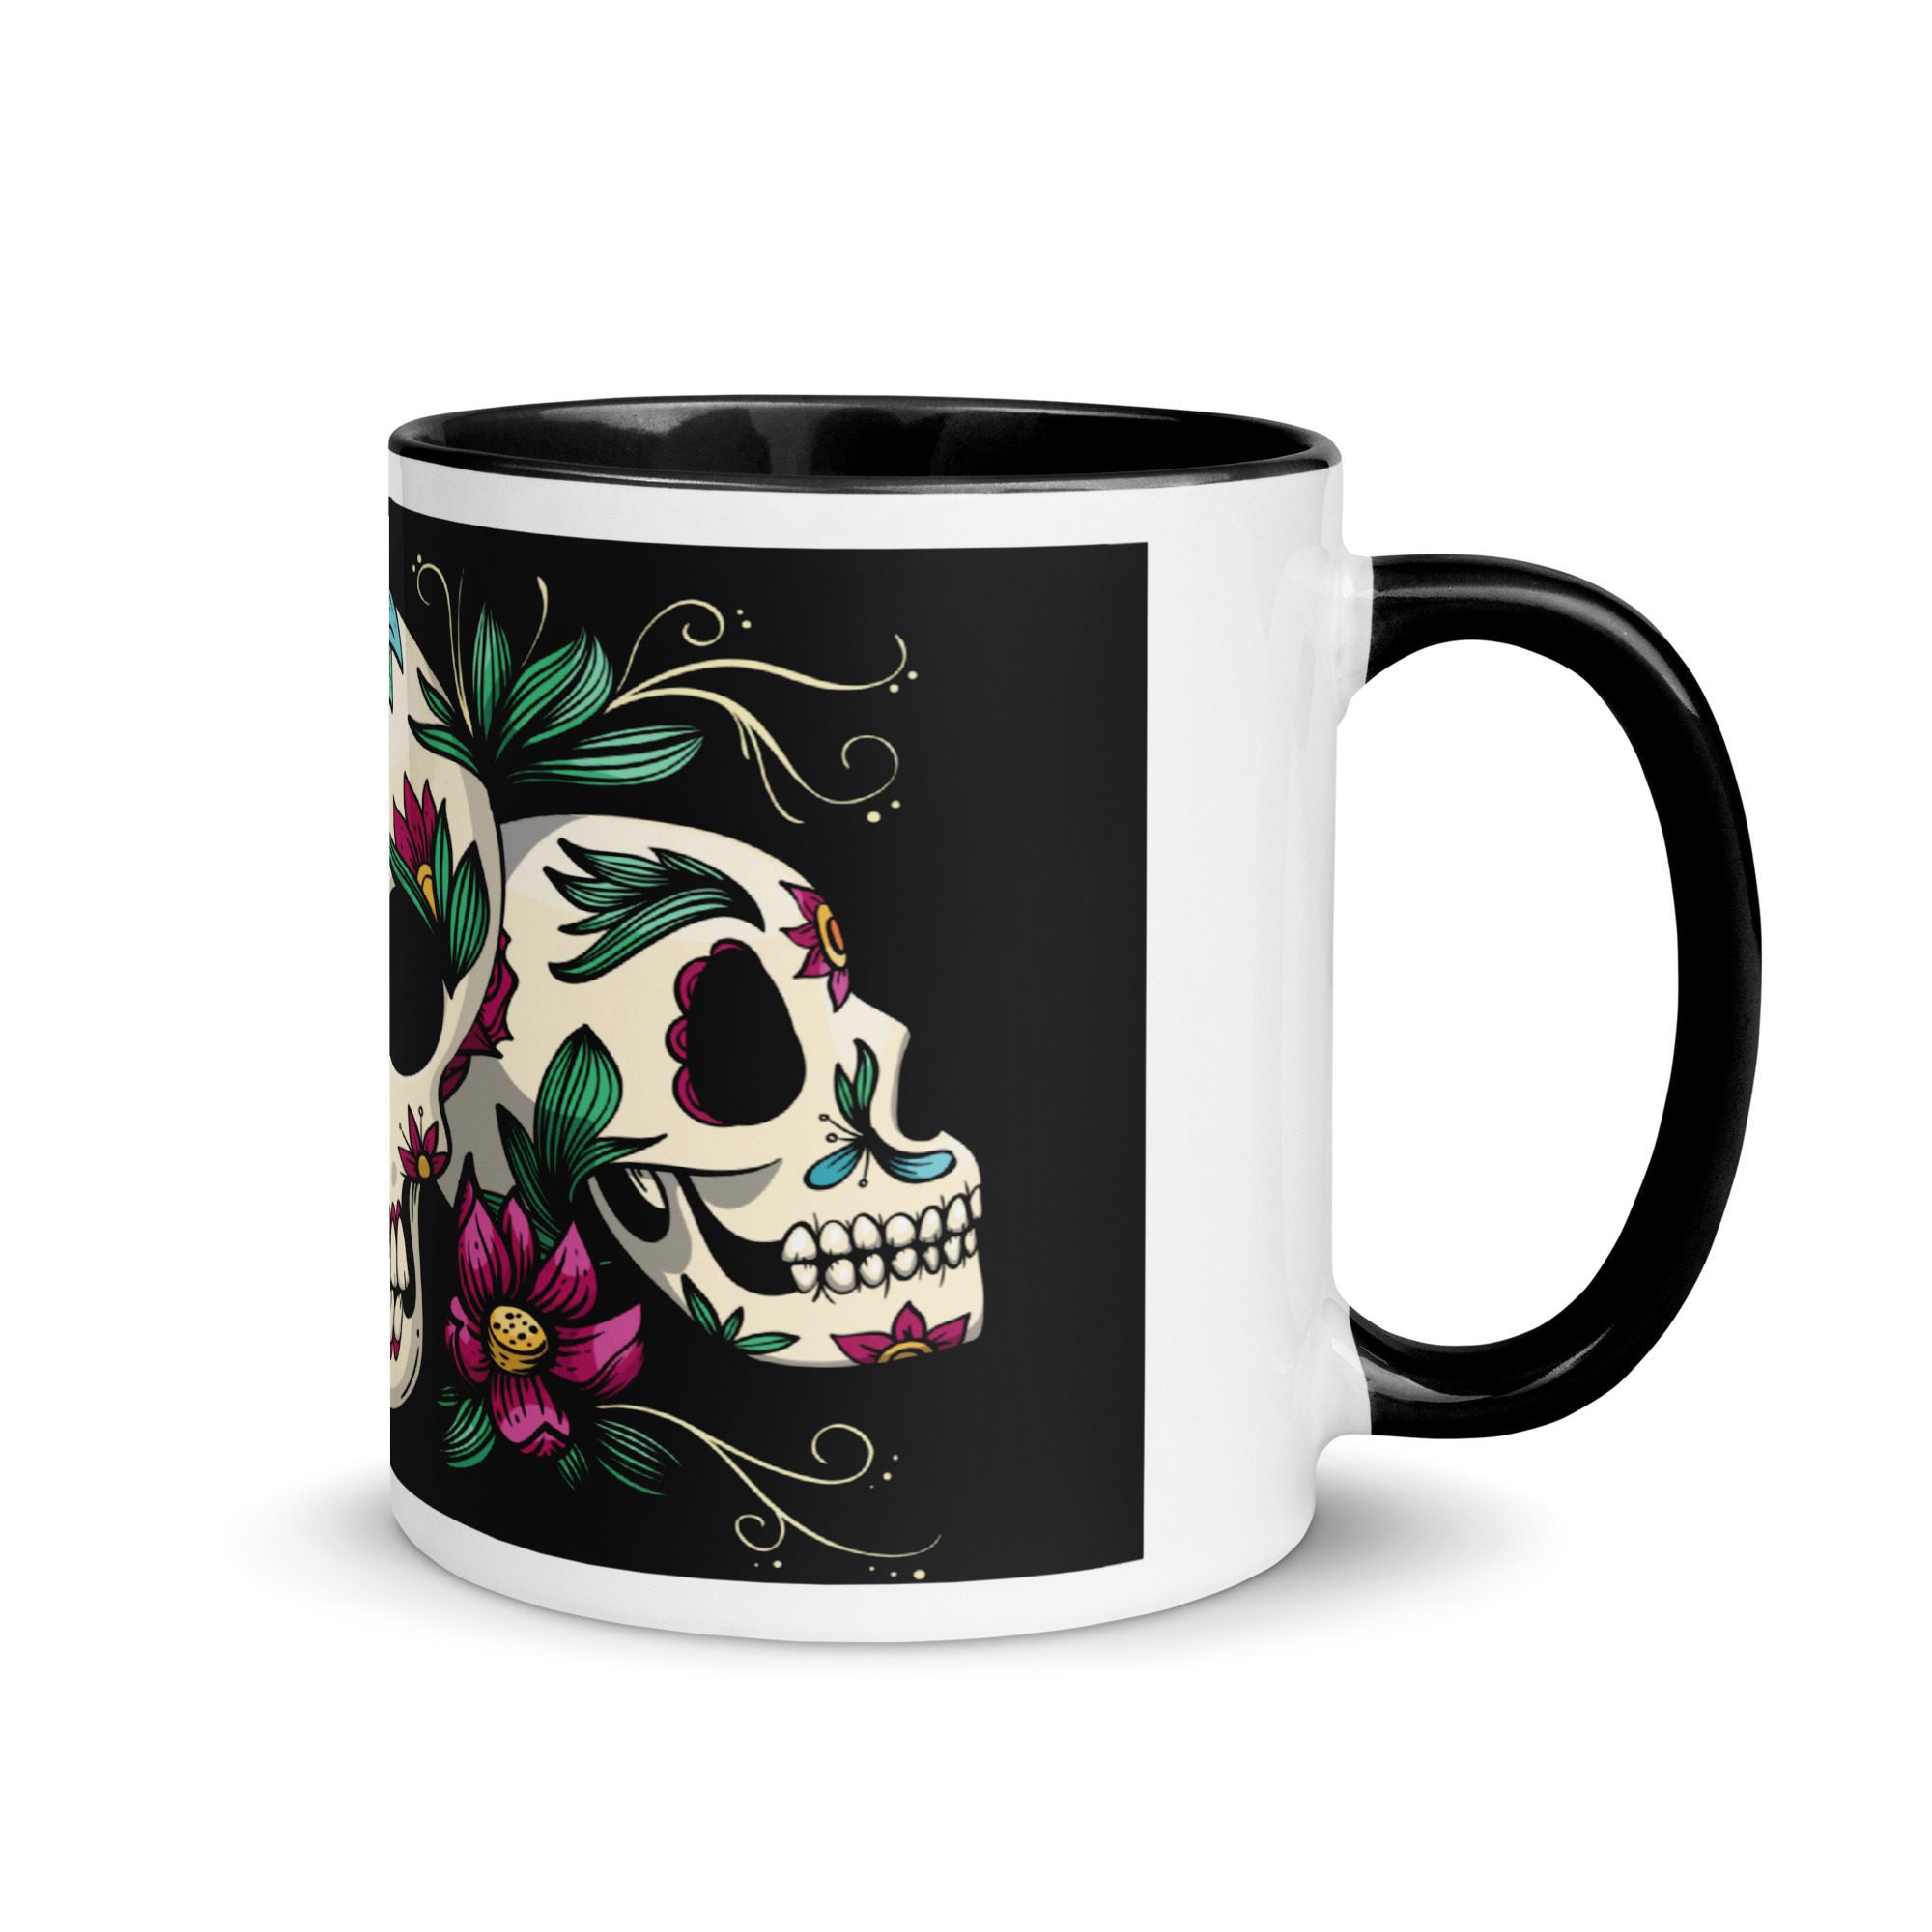 white ceramic mug with color inside black 11 oz right 65367417be5b4